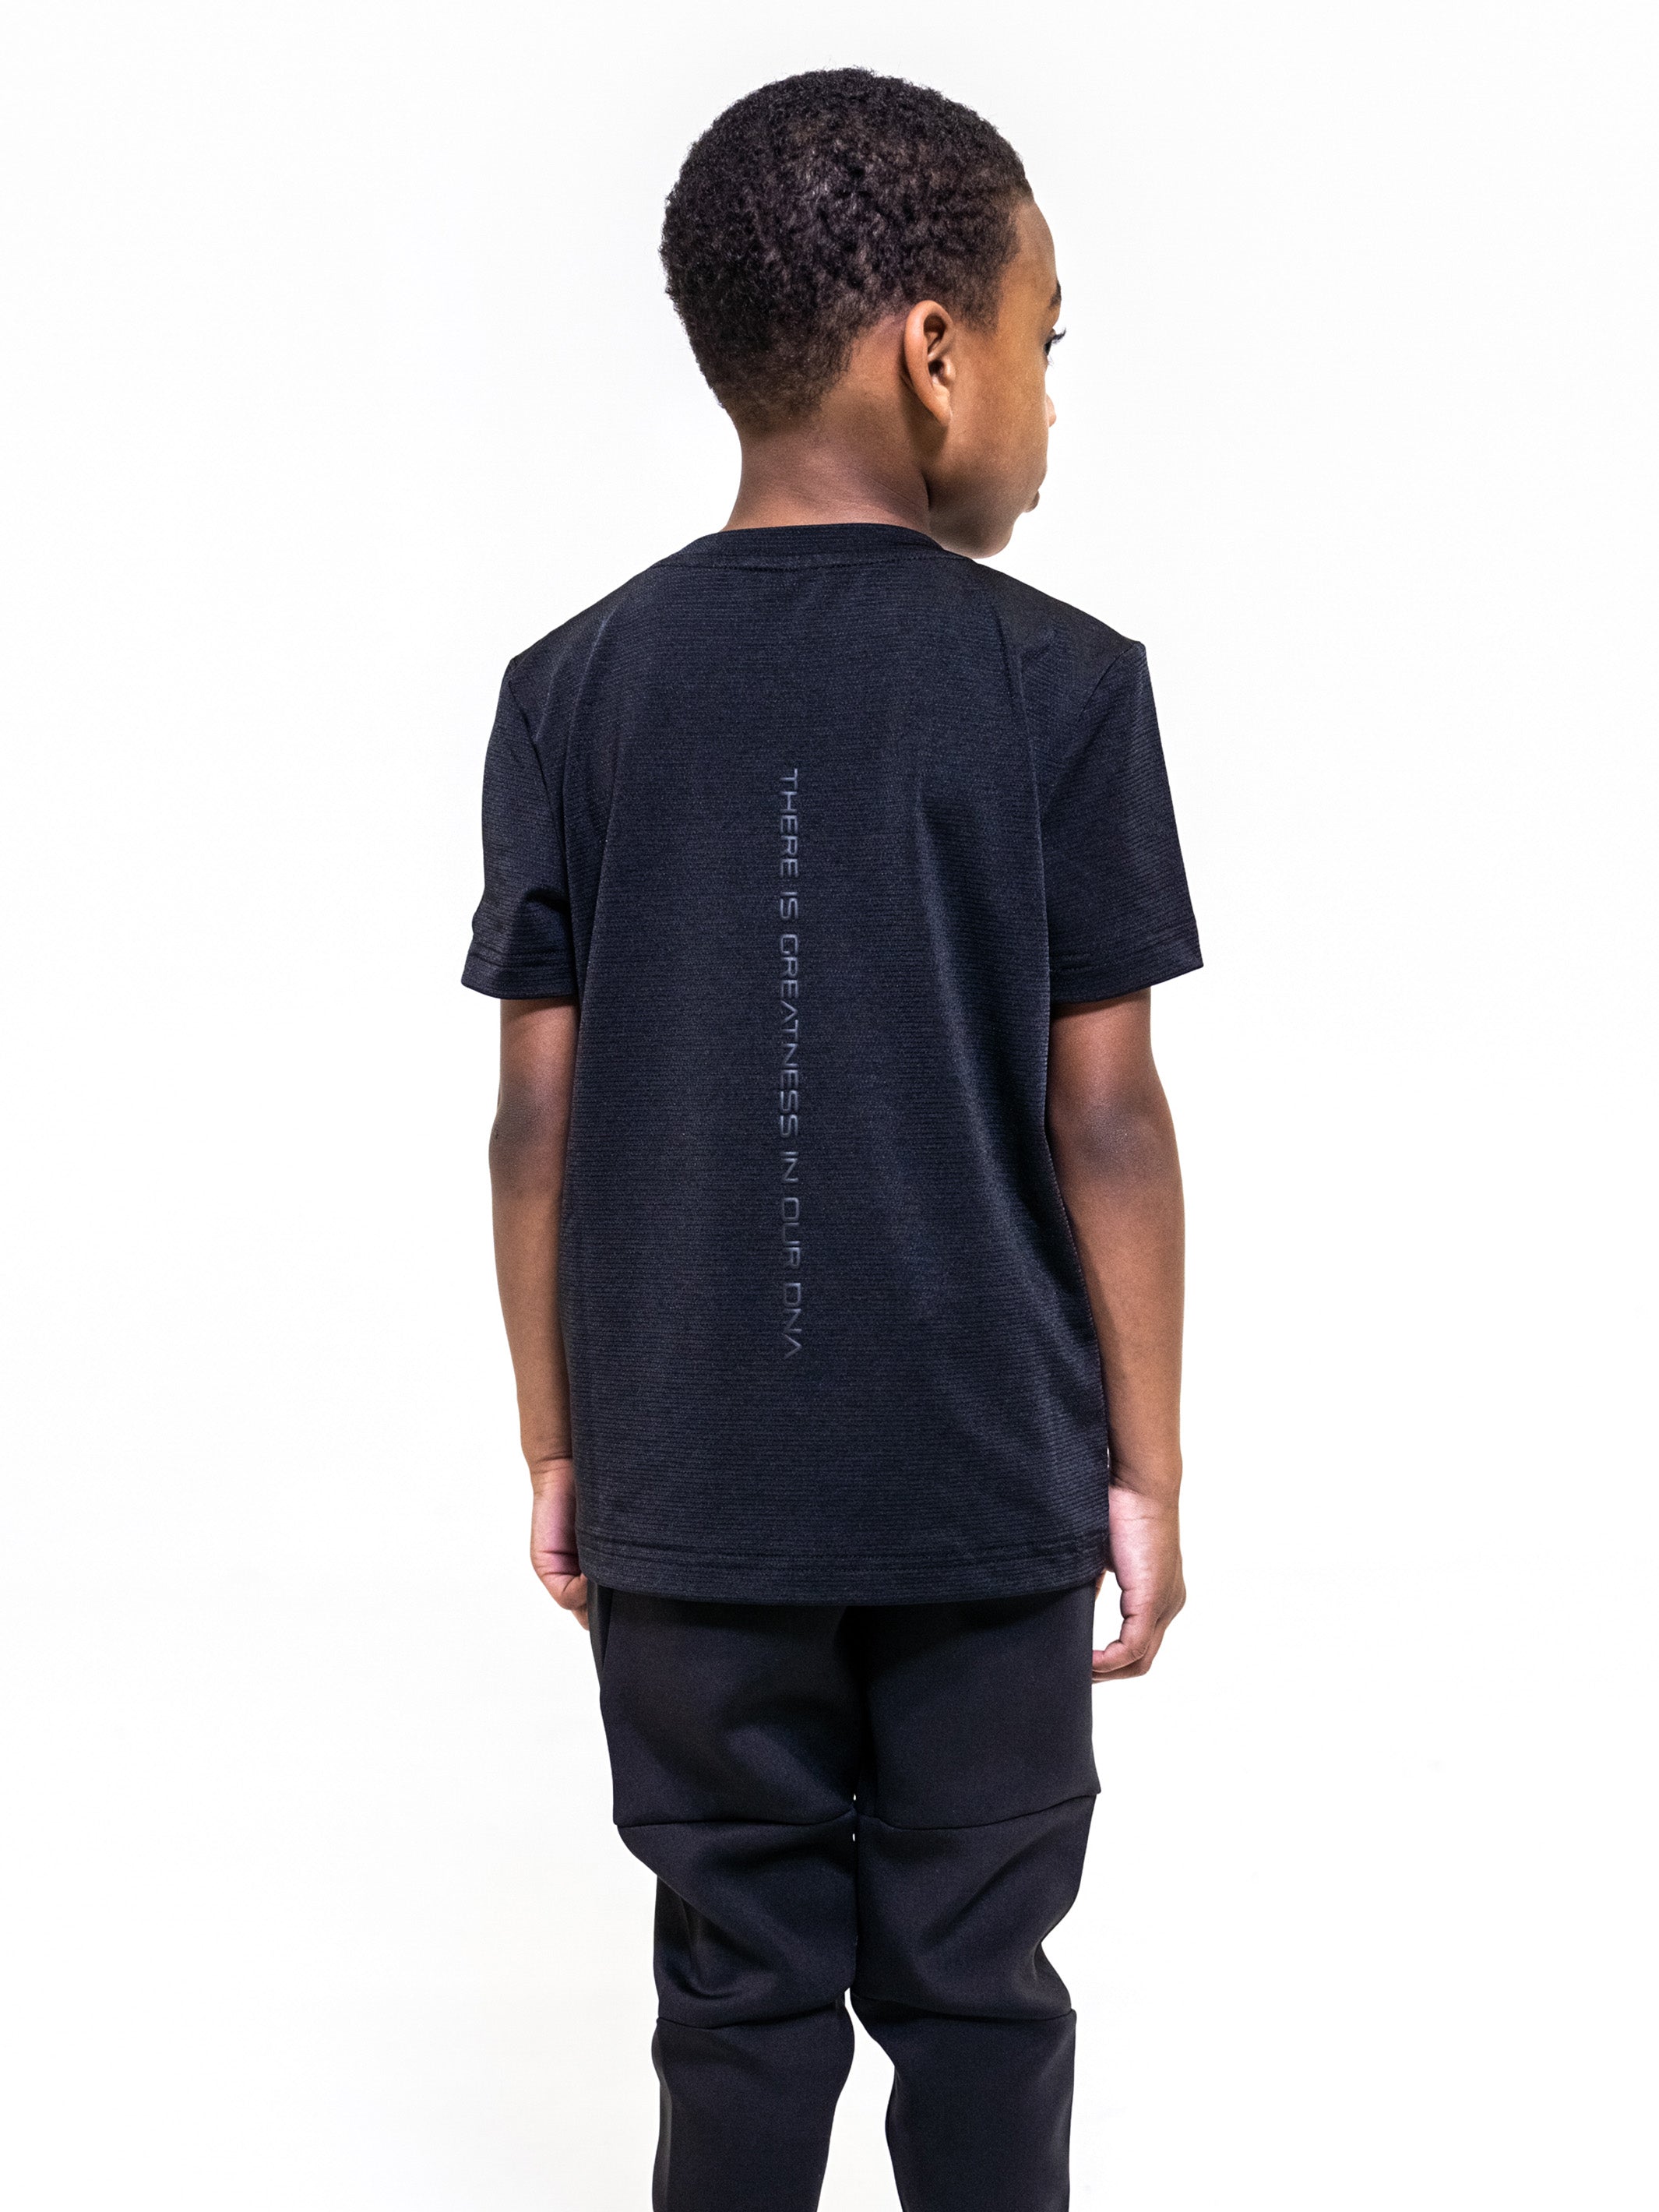 Kids Actively Black Stealth Performance Shirt